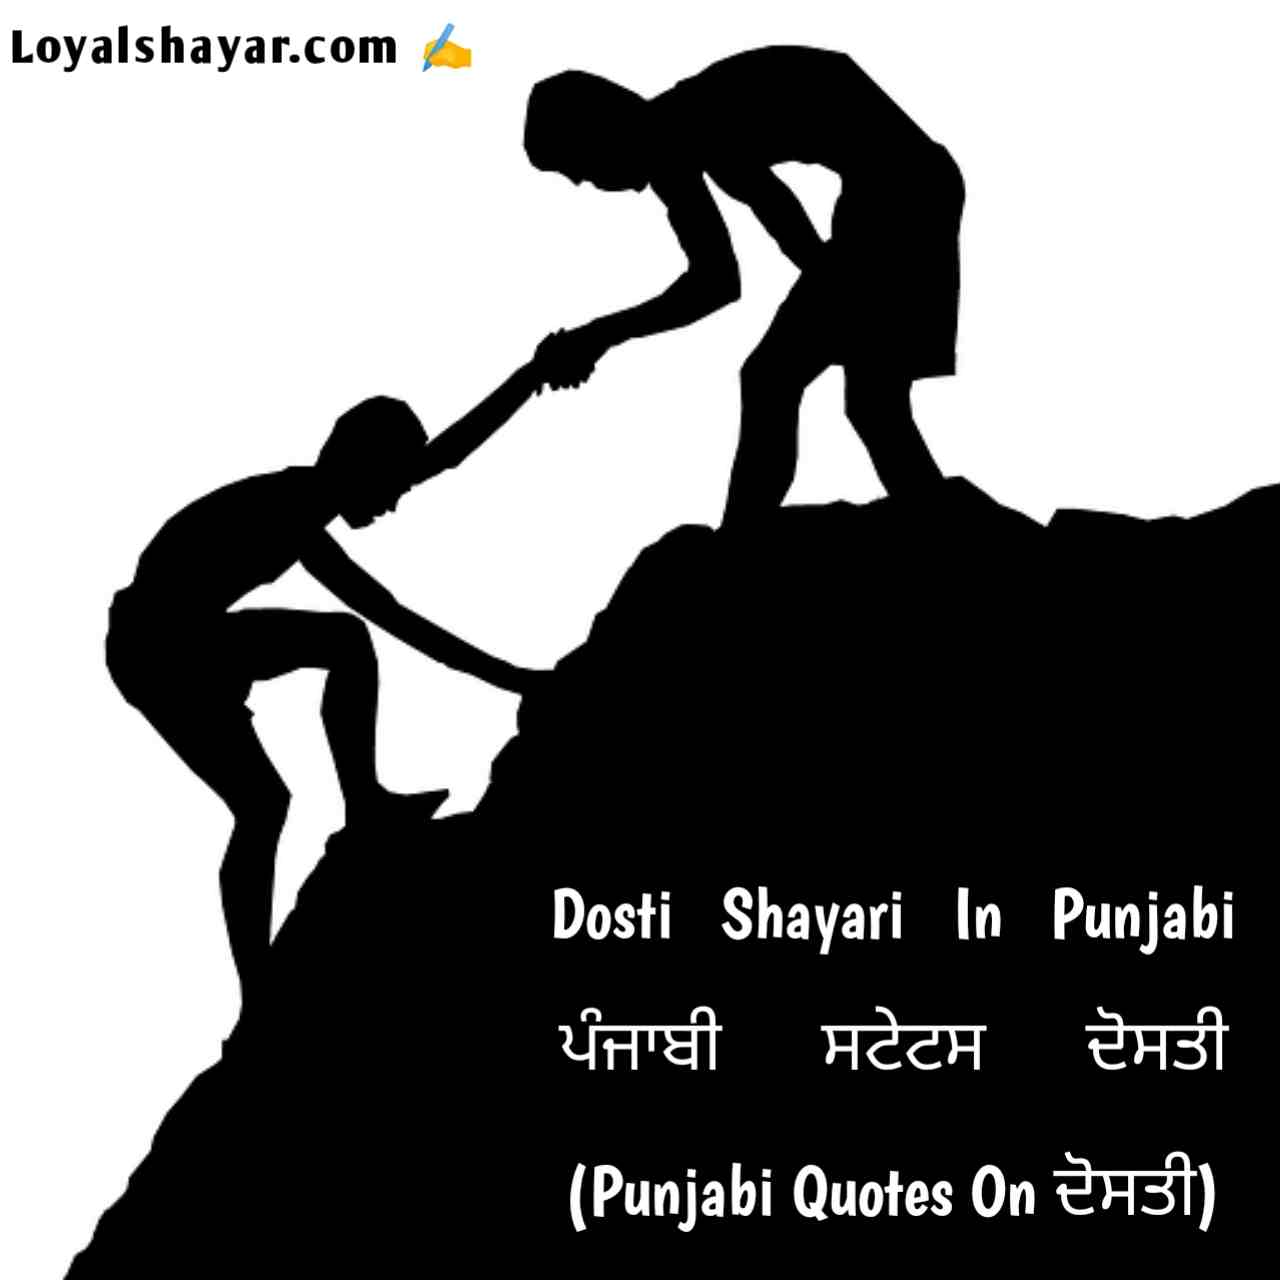 Dosti Shayari In Punjabi _ ਪੰਜਾਬੀ ਸਟੇਟਸ ਦੋਸਤੀ (Punjabi Quotes On ਦੋਸਤੀ)